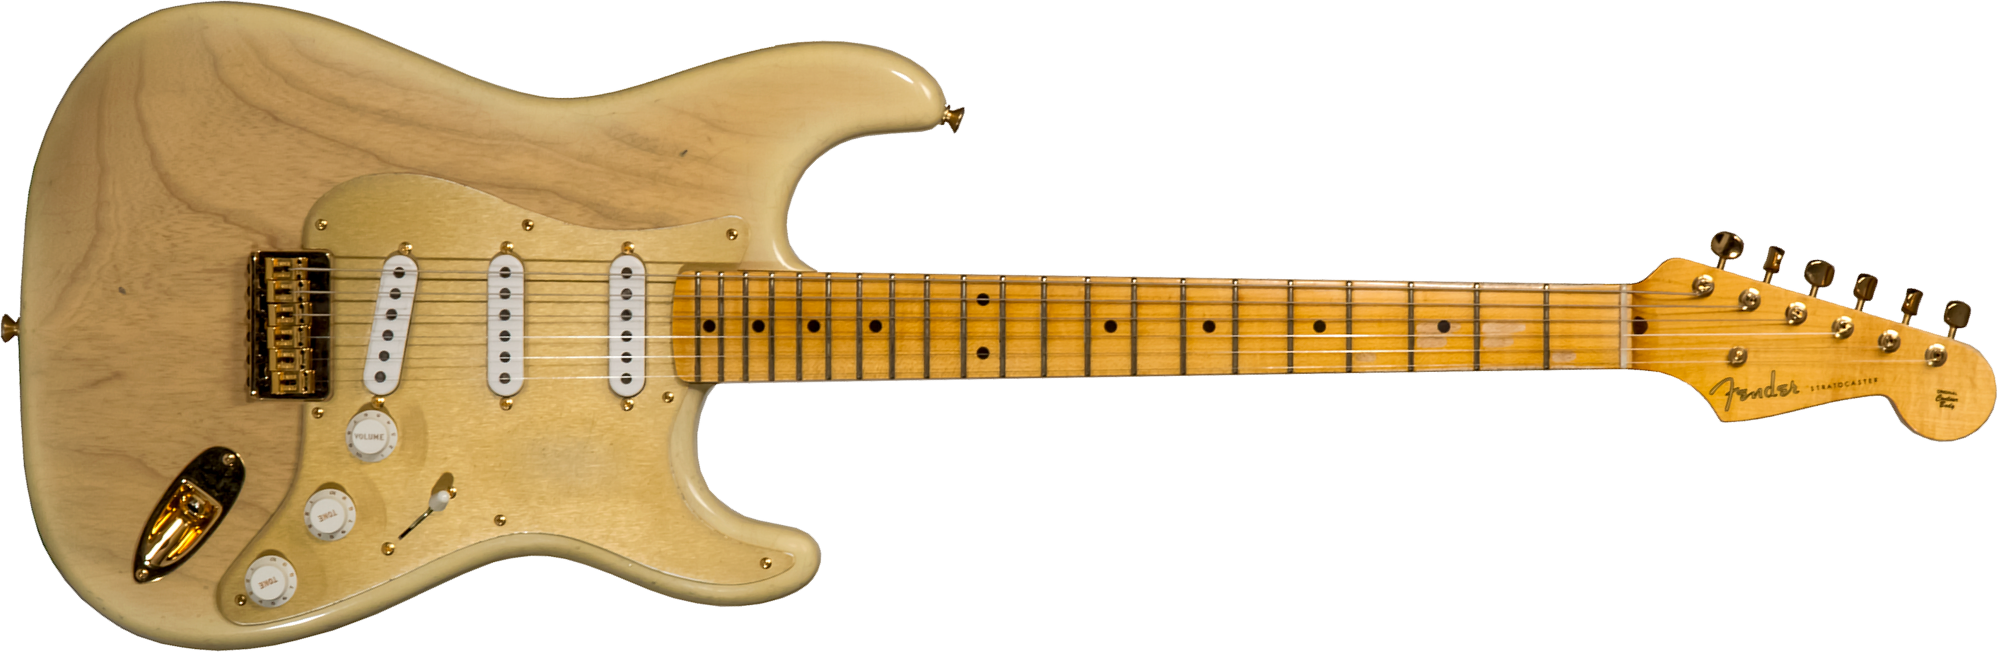 Fender Custom Shop Strat 1955 Hardtail Gold Hardware 3s Trem Mn #cz568215 - Journeyman Relic Natural Blonde - E-Gitarre in Str-Form - Main picture